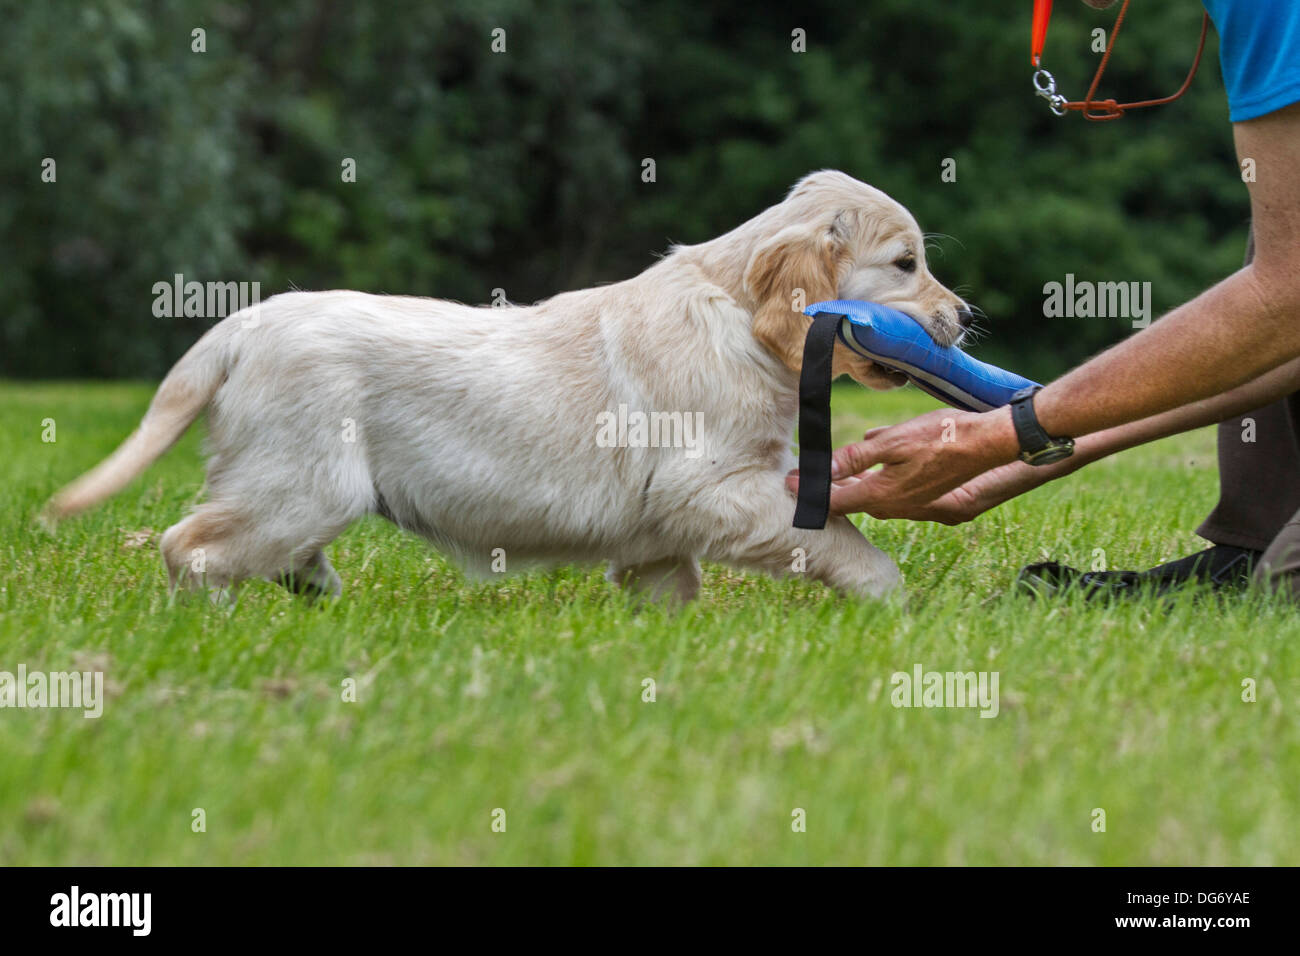 Golden retriever (Canis lupus familiaris) pup aprender a buscar en el jardín Foto de stock